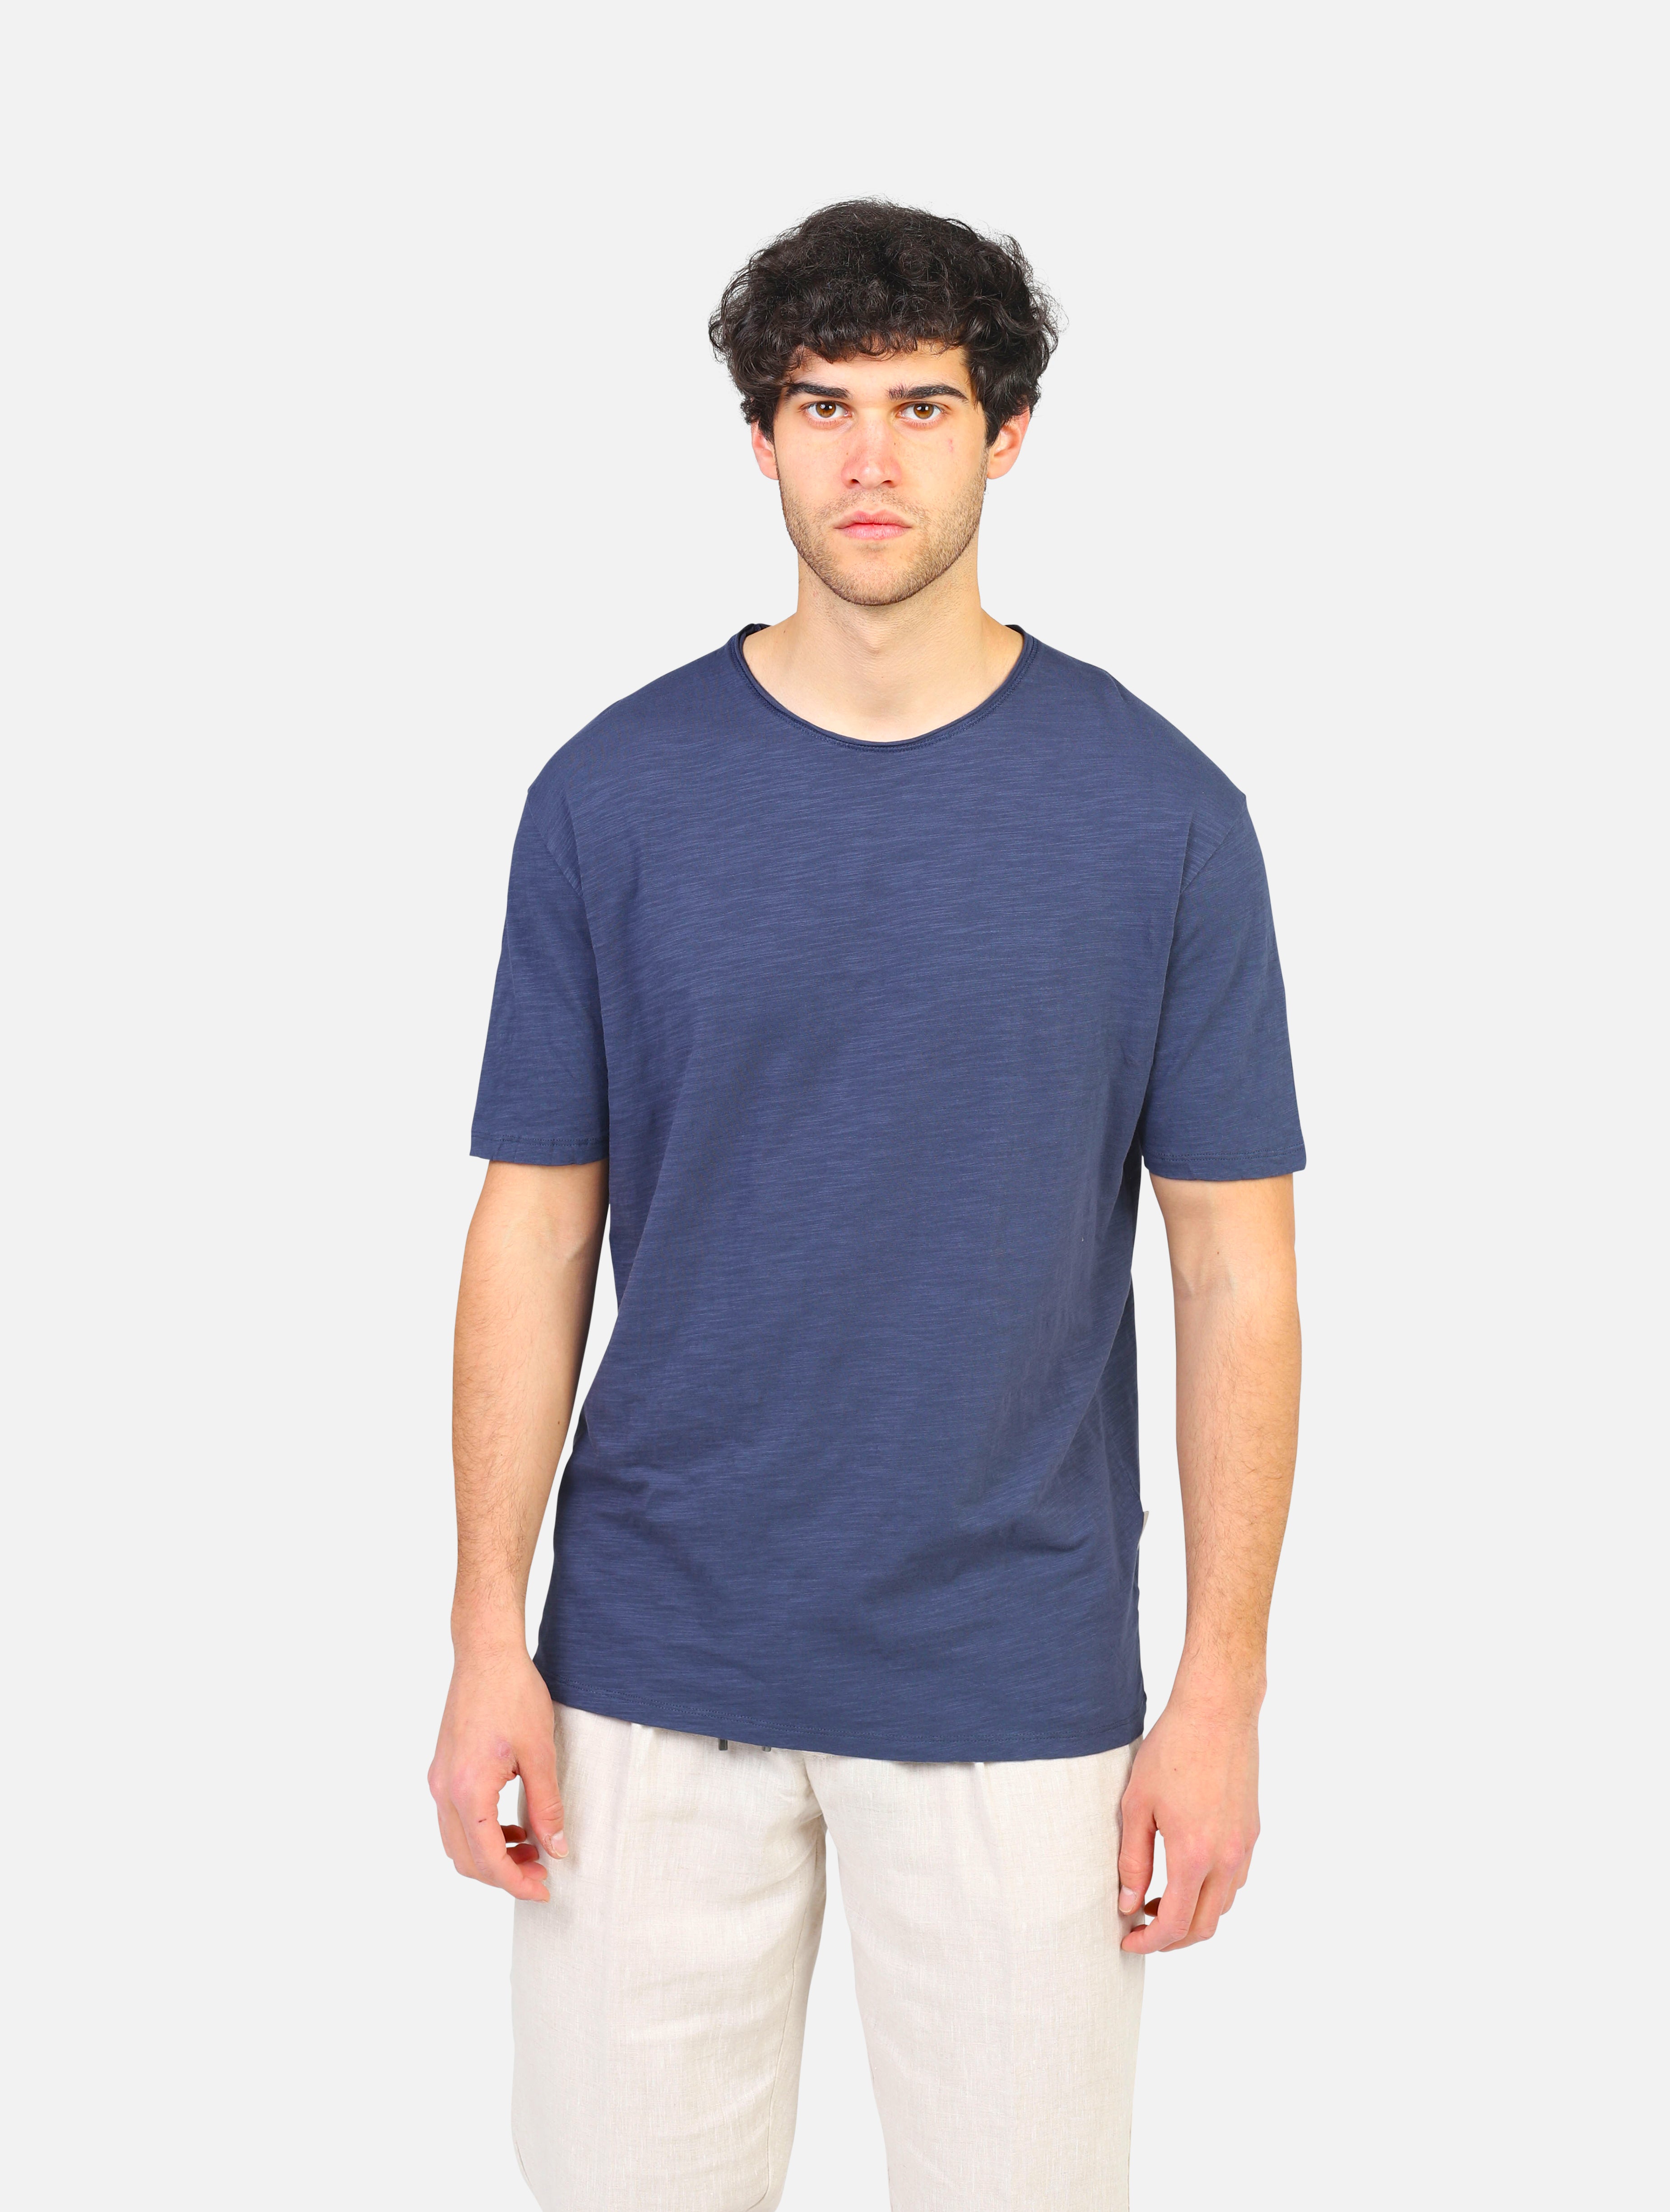 T-shirt gianni lupo -  blu uomo  - 1